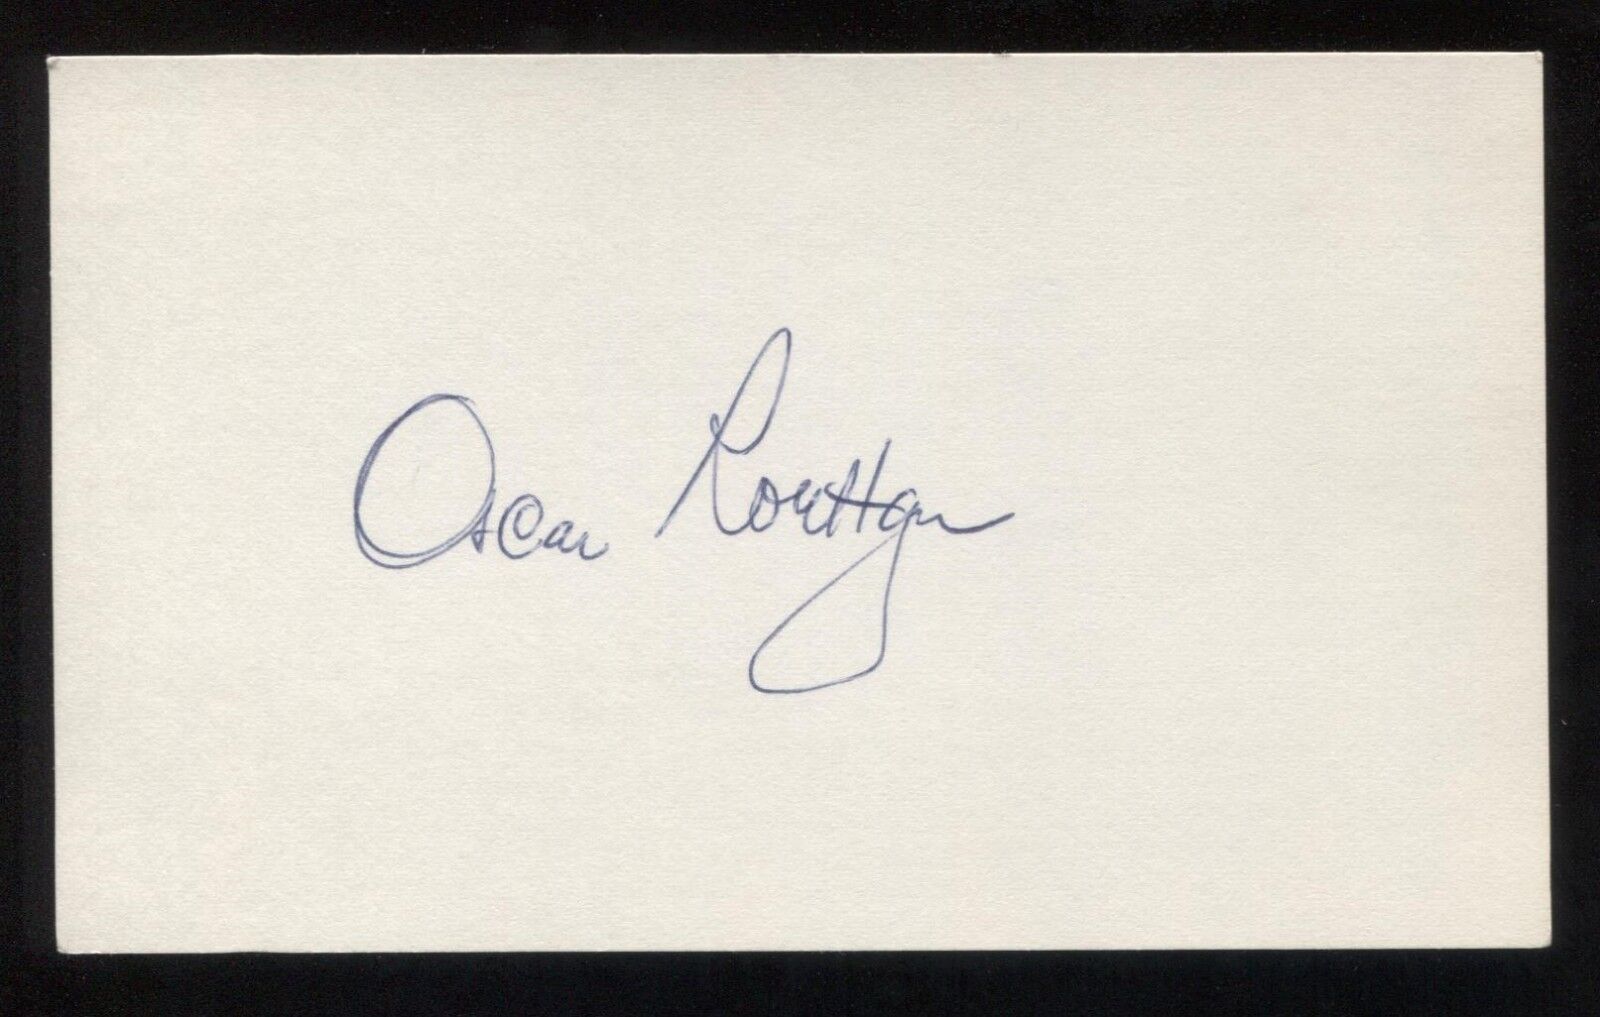 Oscar Roettger Signed 3x5 Index Card Autographed Vintage Baseball Signature